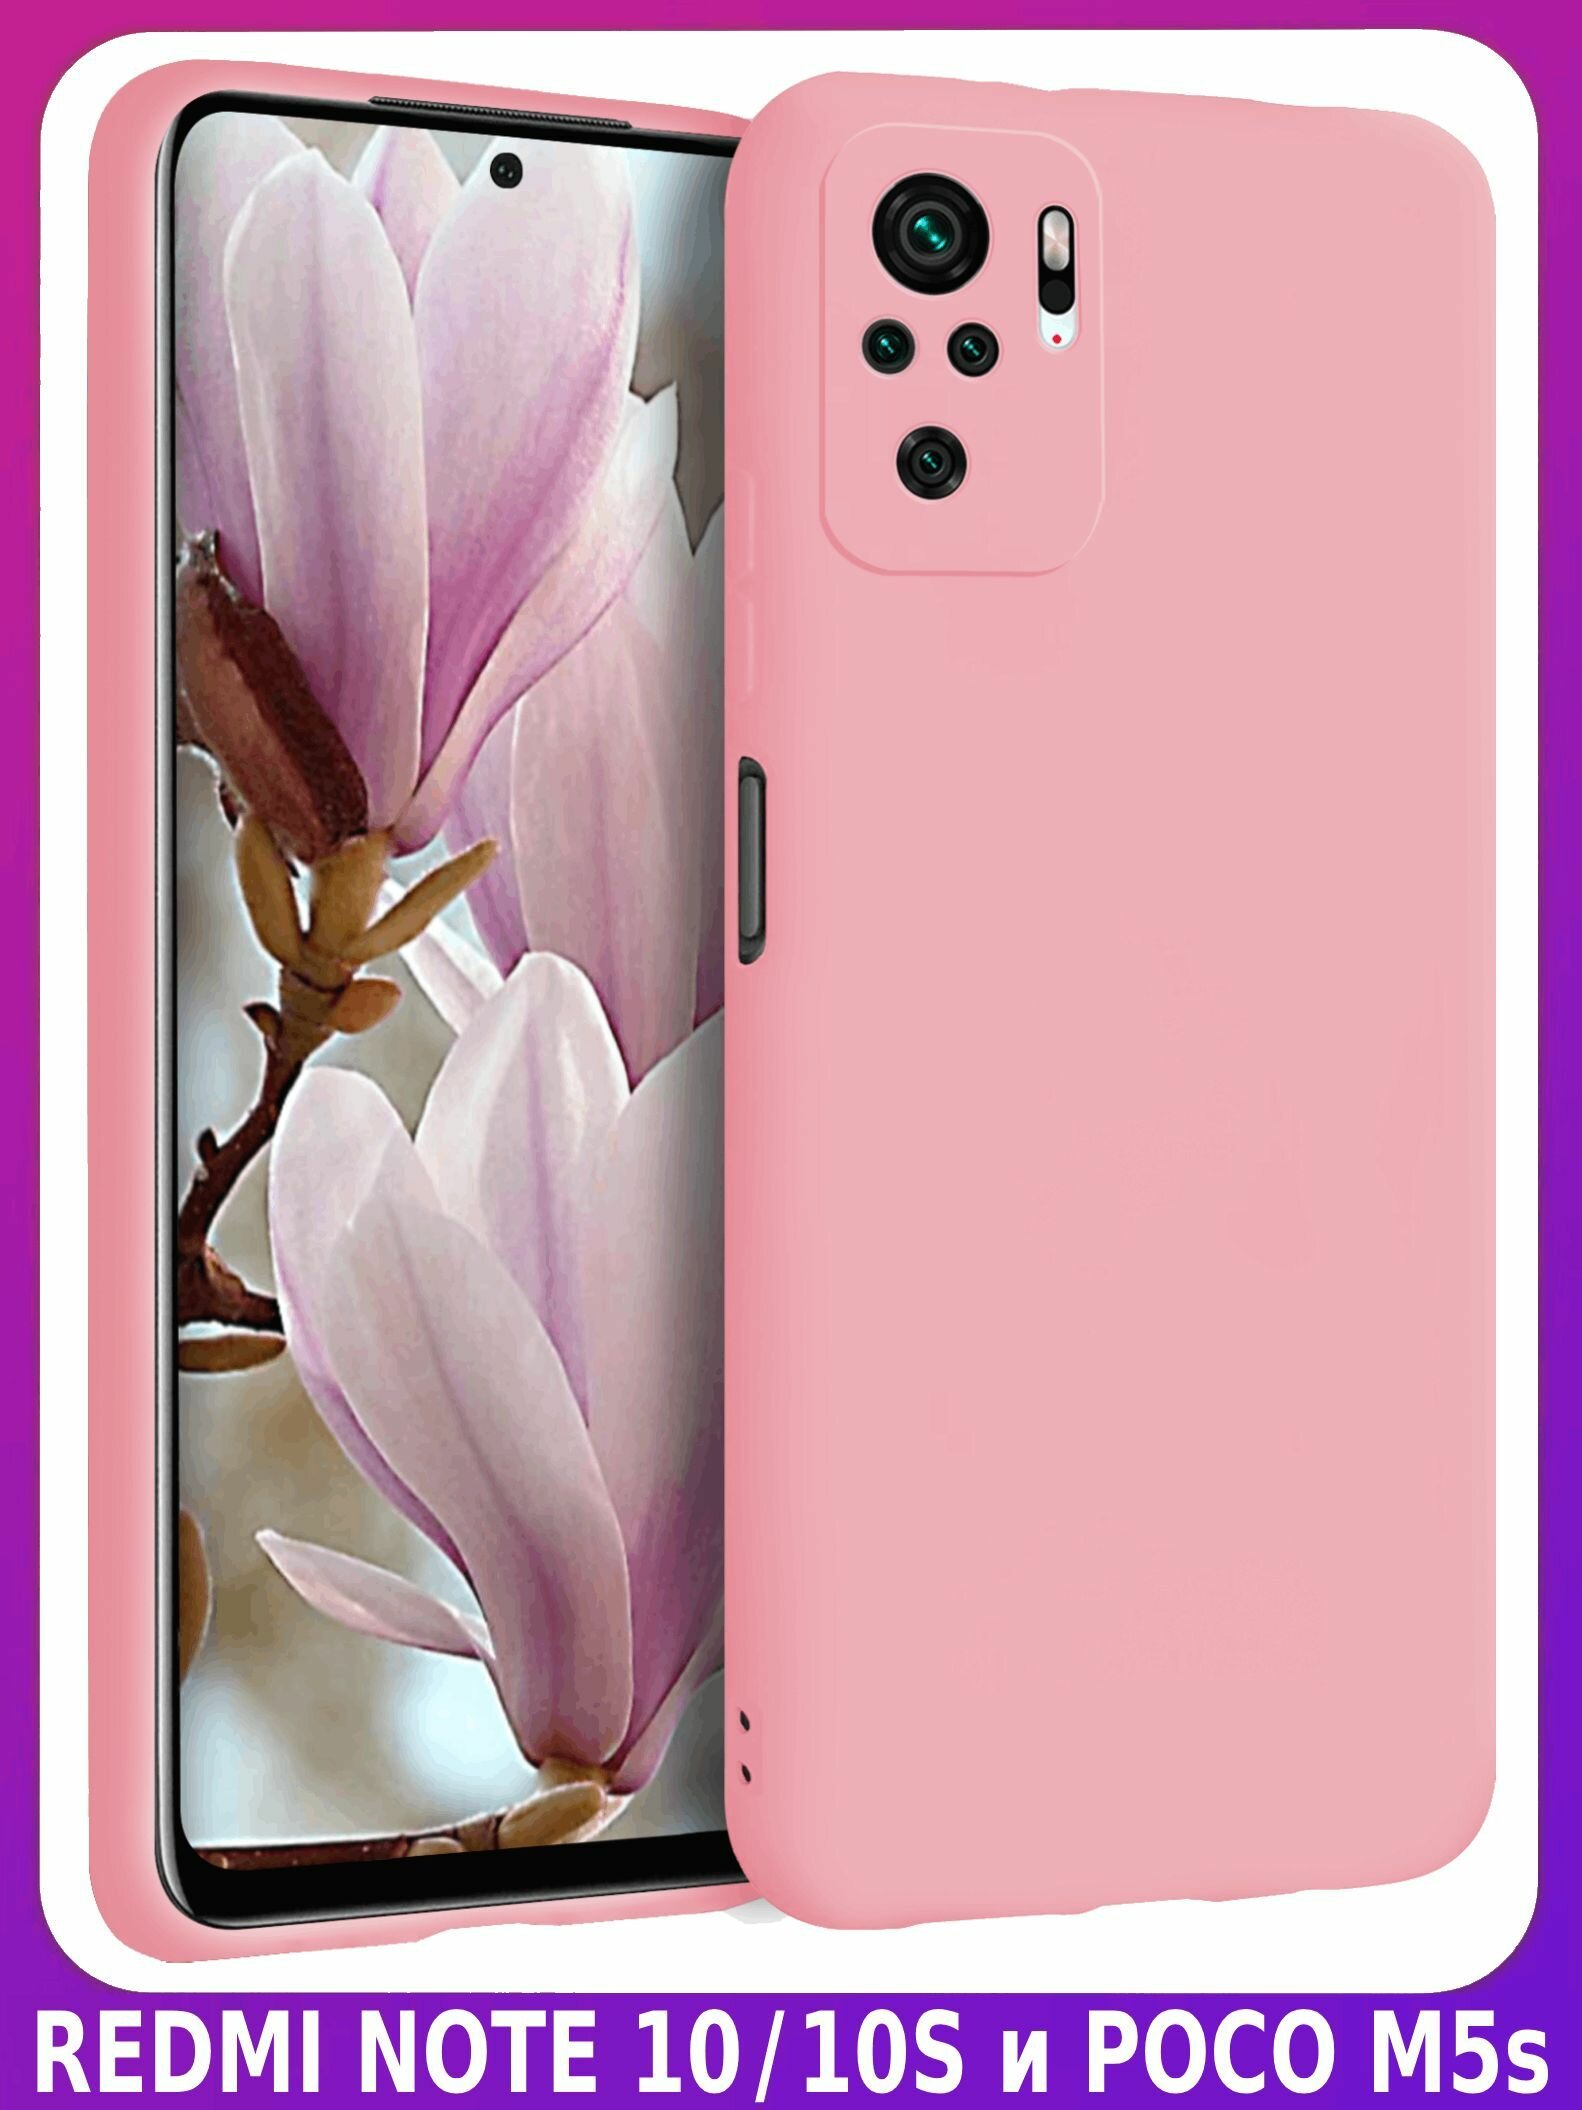 Нежно-розовый Soft Touch чехол класса Премиум - ХIАОМI редми ноут 10/10S и поко M5s